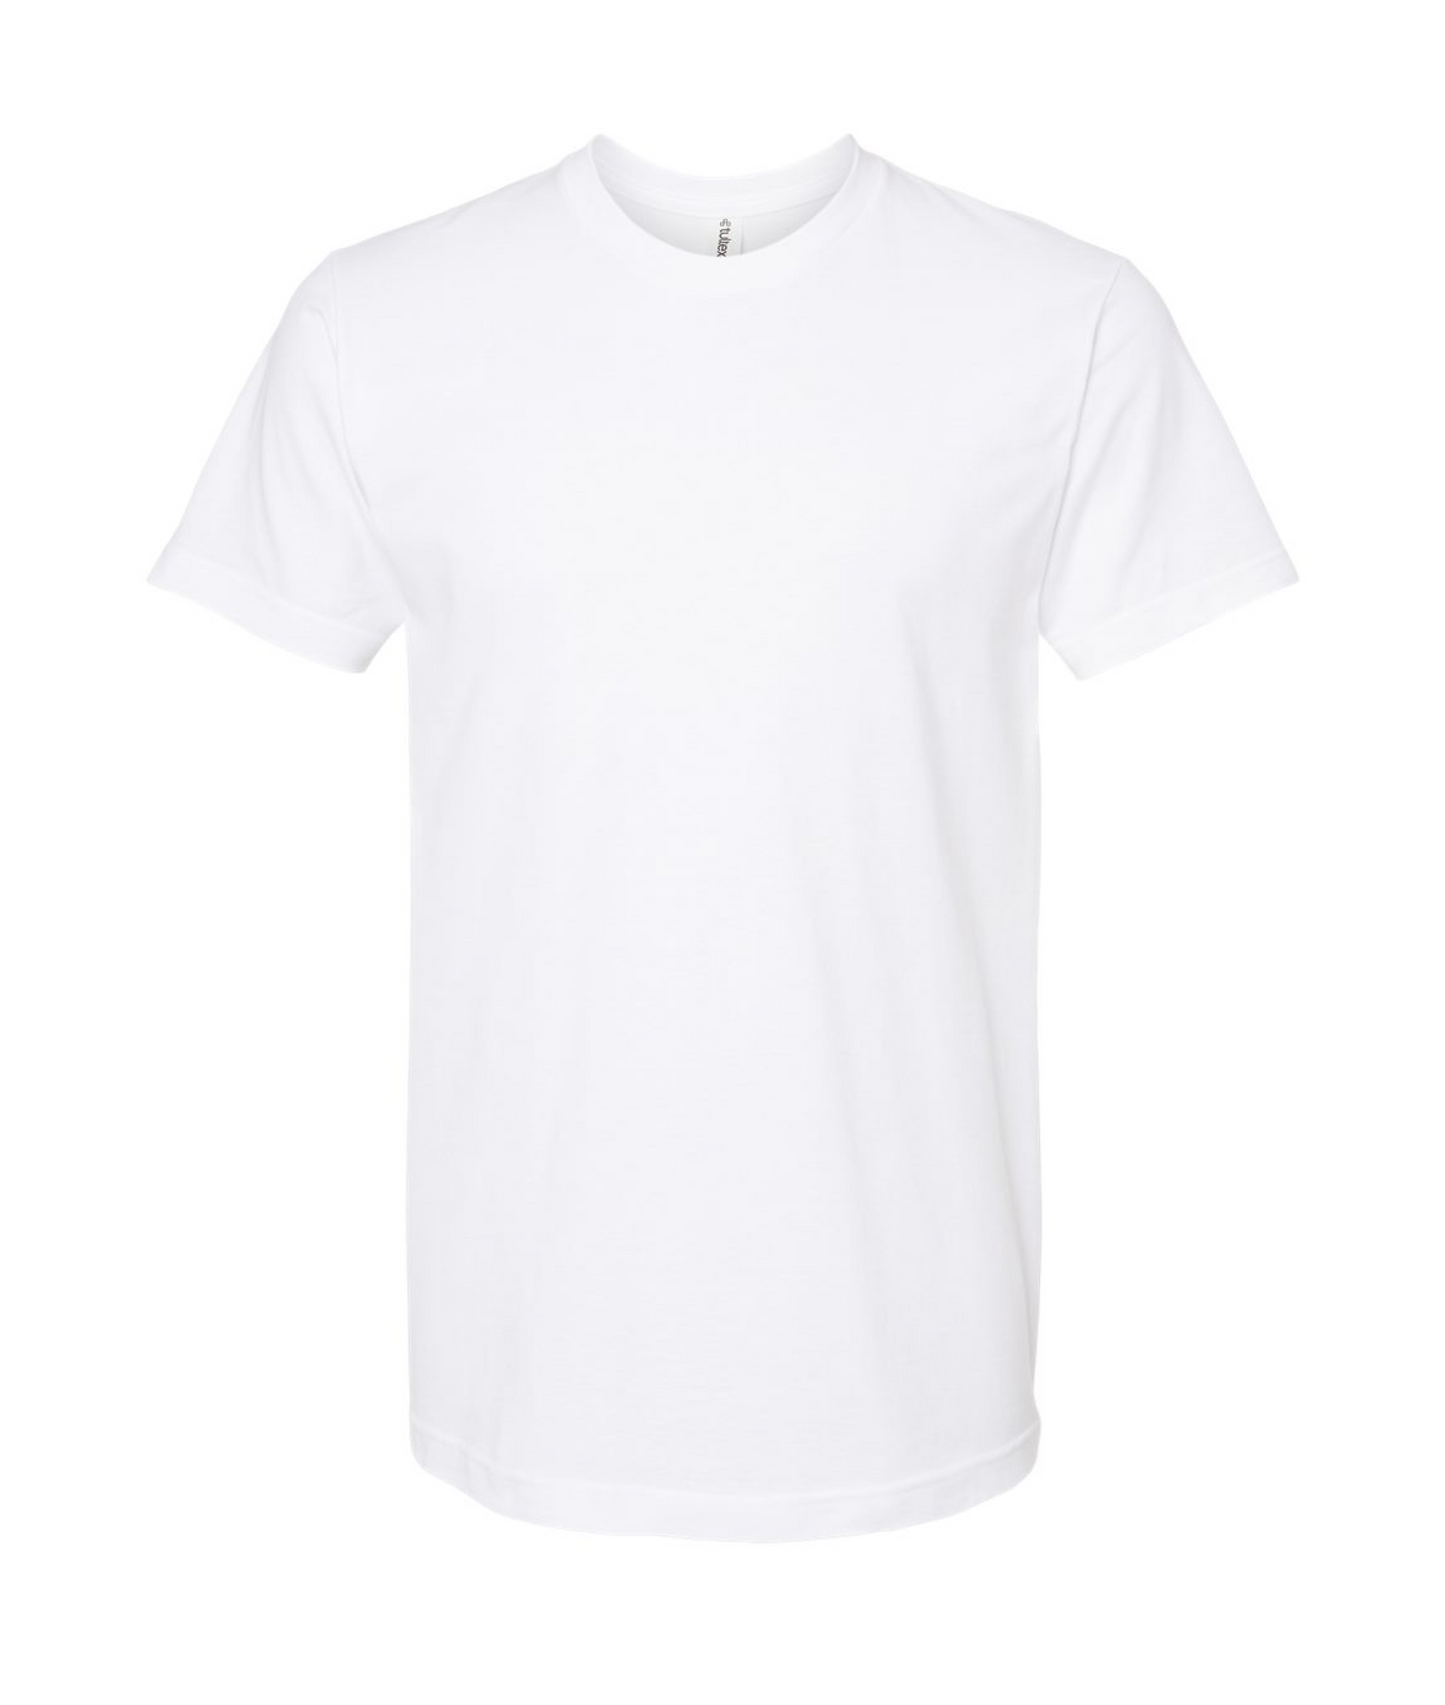 Scuba Steve - PLAY - White T-Shirt